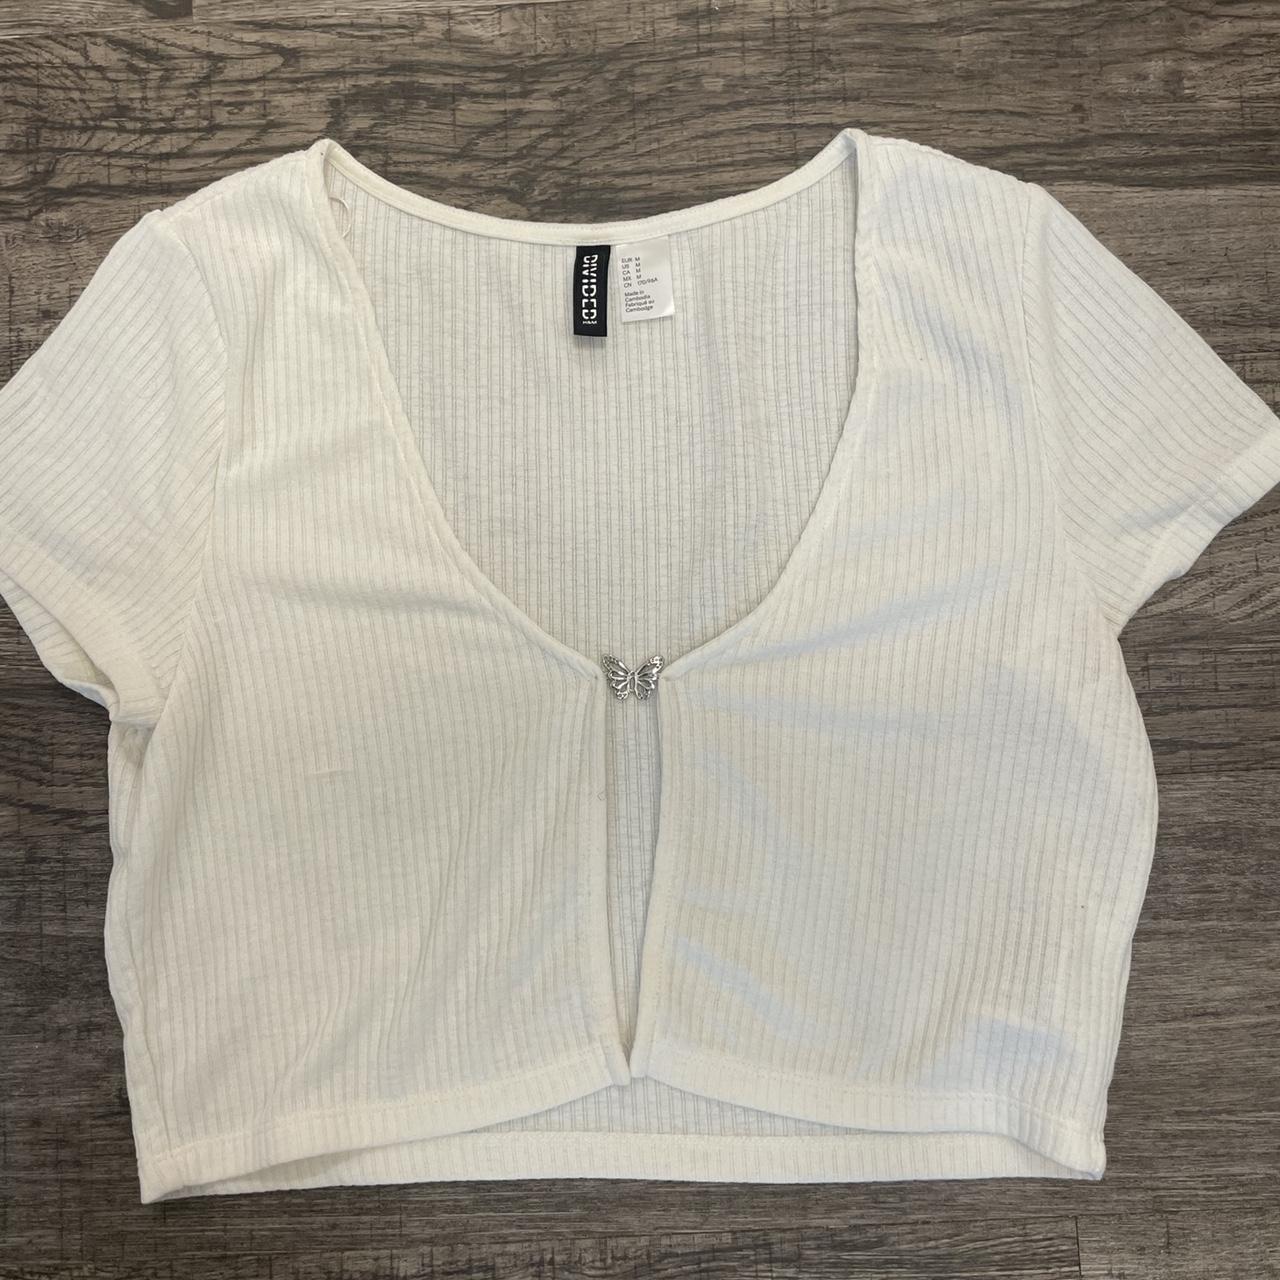 🦋 Butterfly Crop top Shirt - White